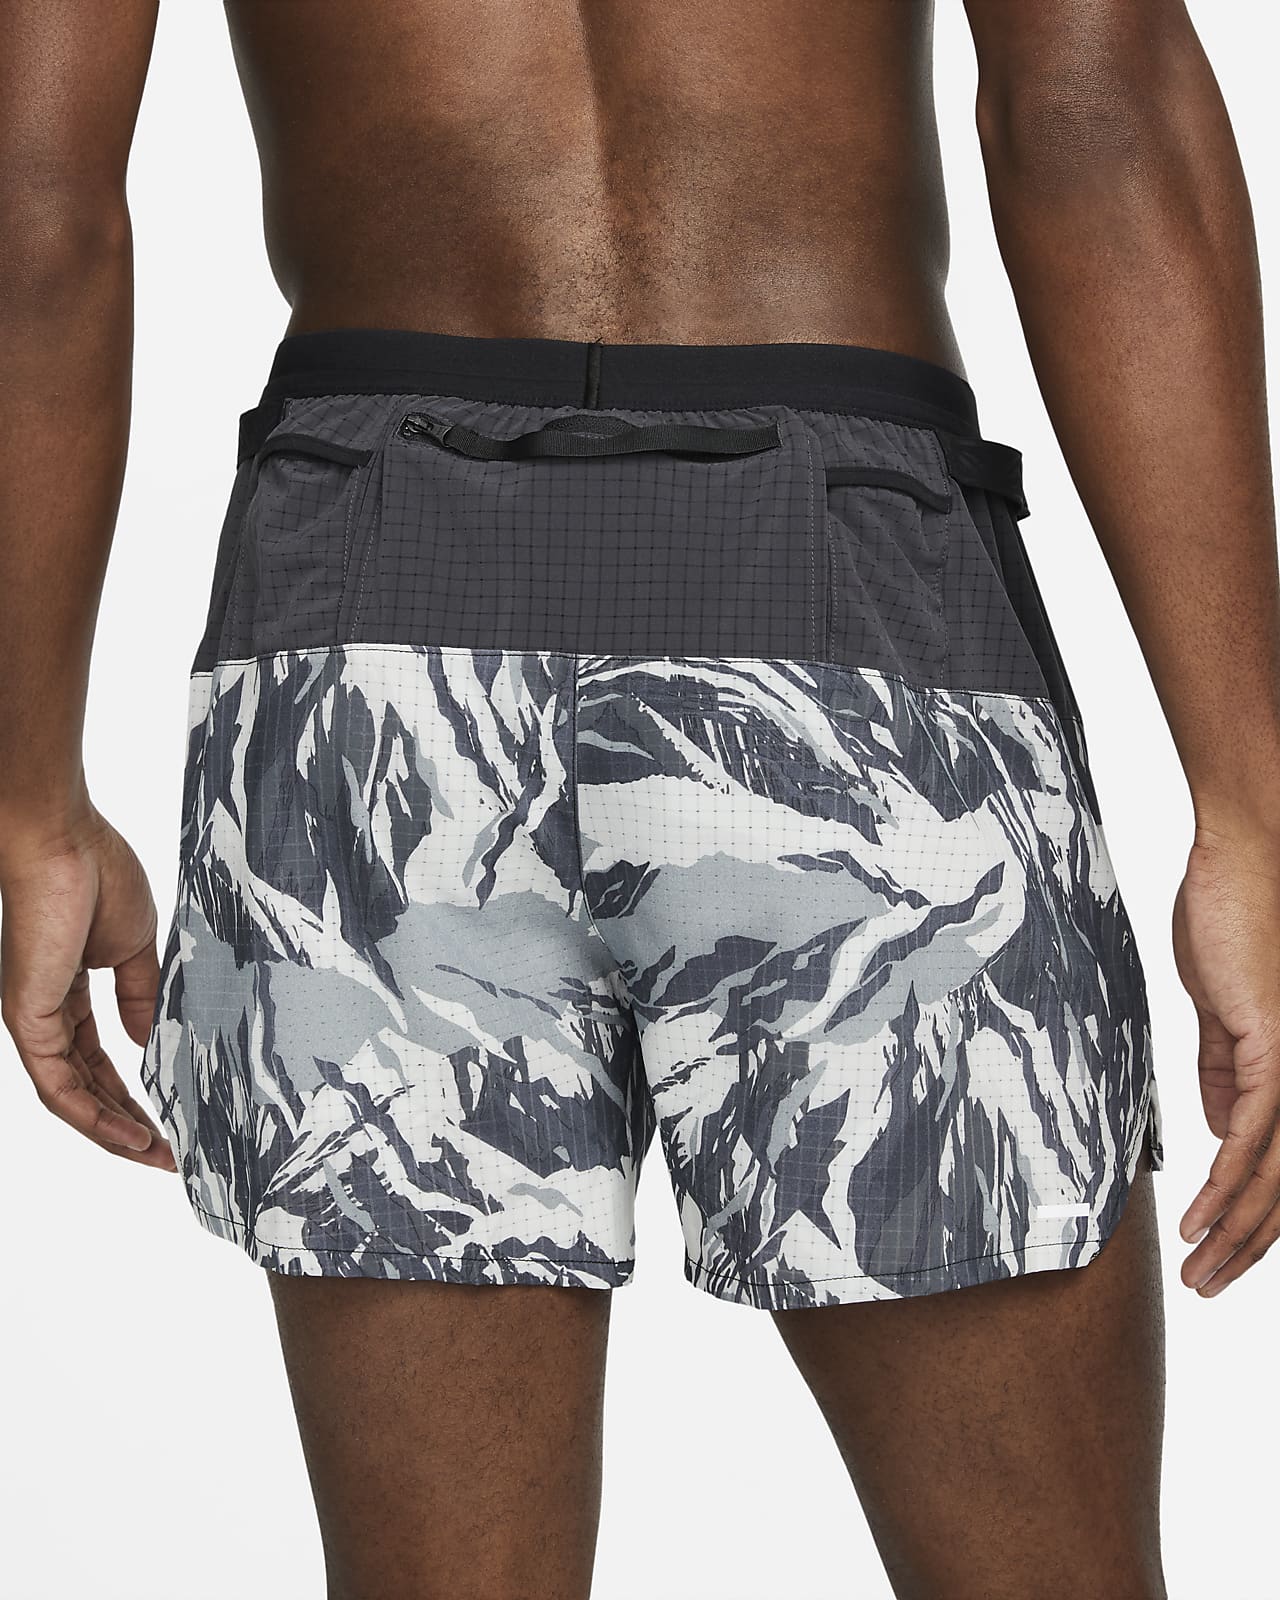 Shorts de trail running con ropa interior forrada de 13 para hombre Nike Flex Nike.com